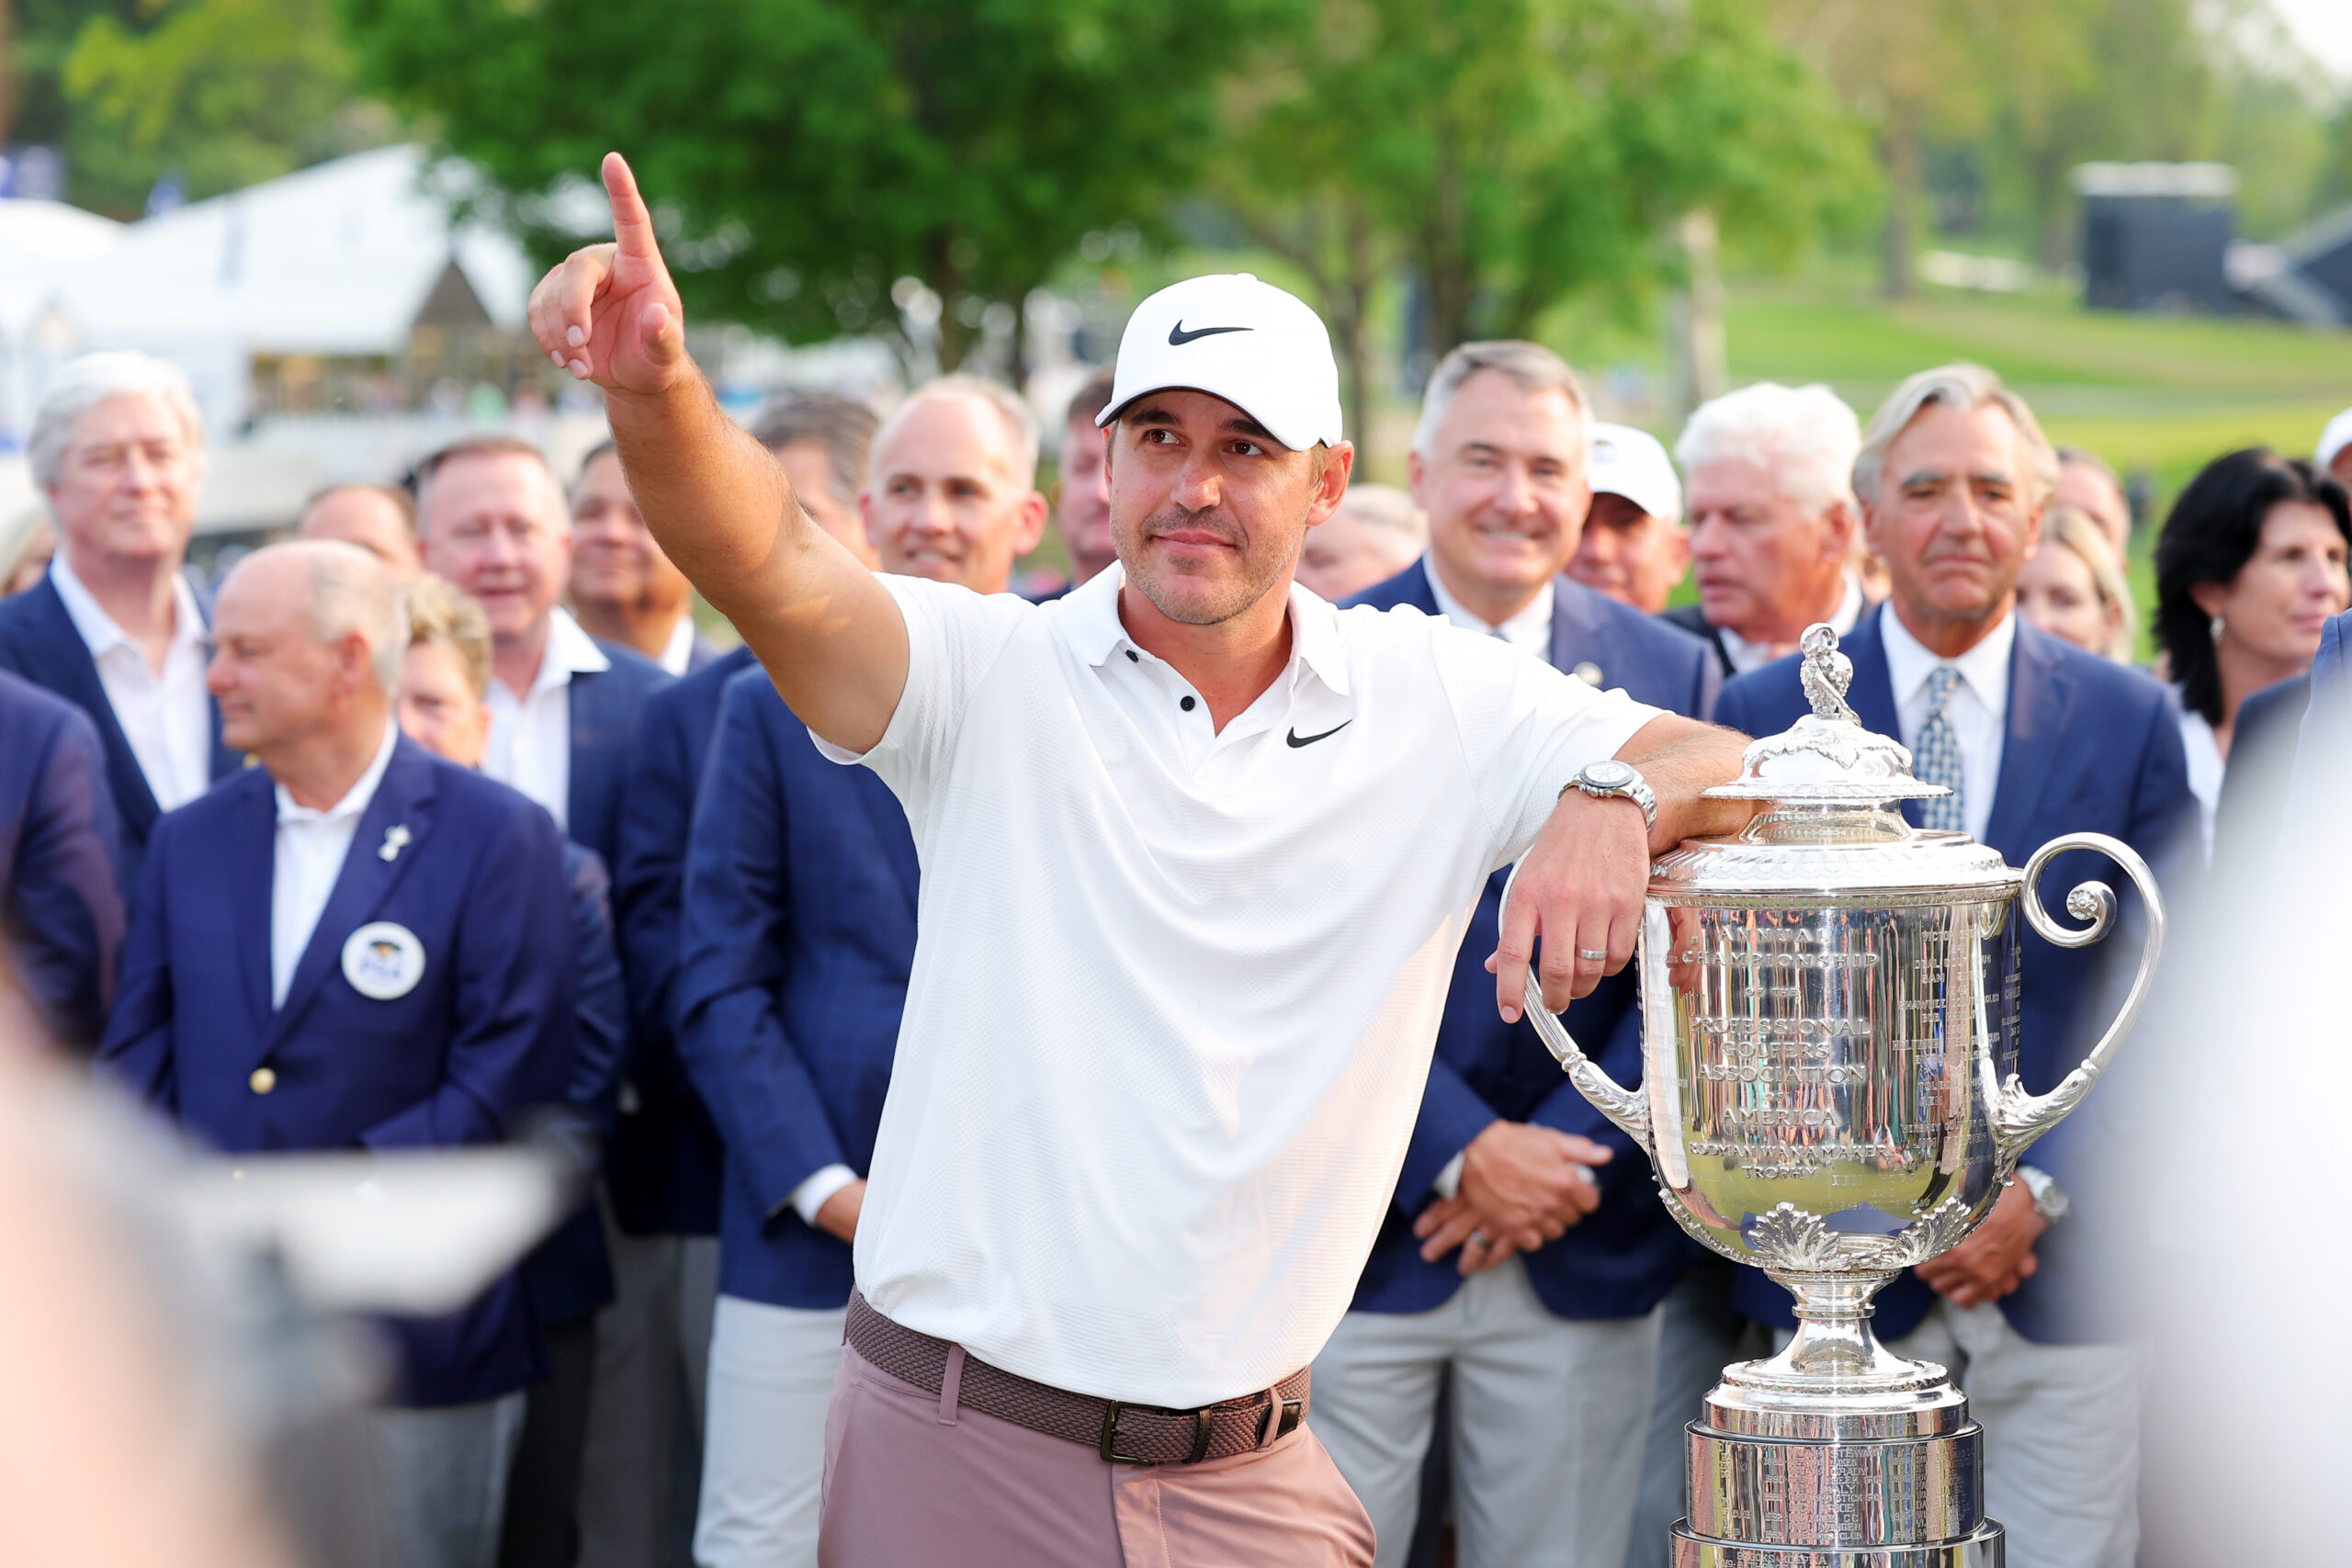 How many golfers have won multiple PGA Championships?